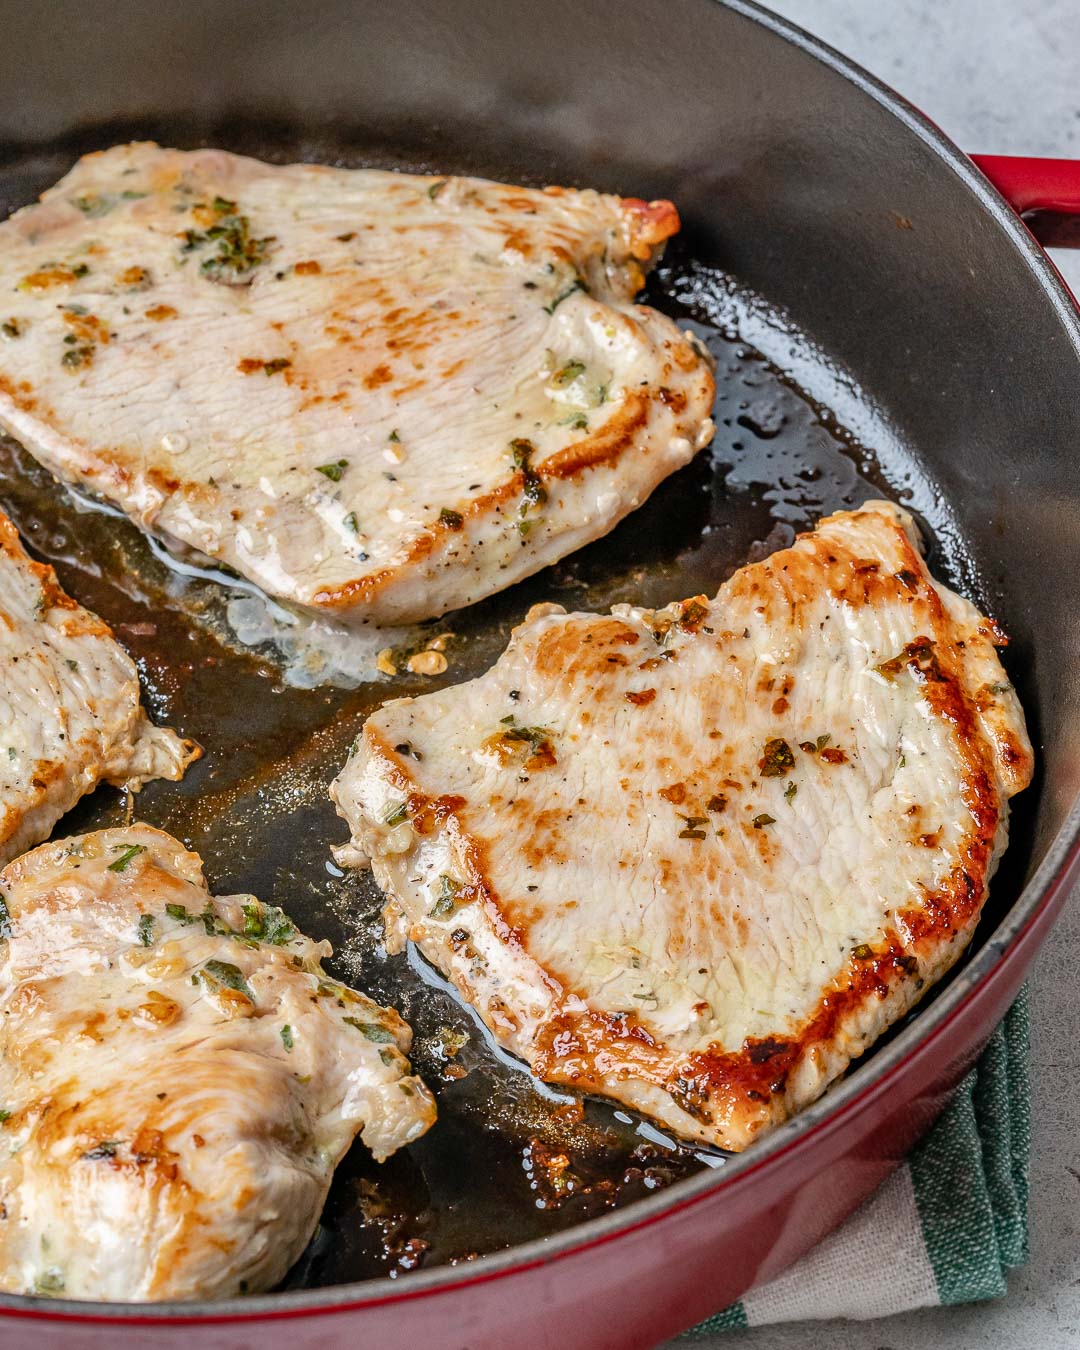 https://cleanfoodcrush.com/wp-content/uploads/2020/04/healthy-Garlic-herb-turkey-cutlets-cfc.jpg